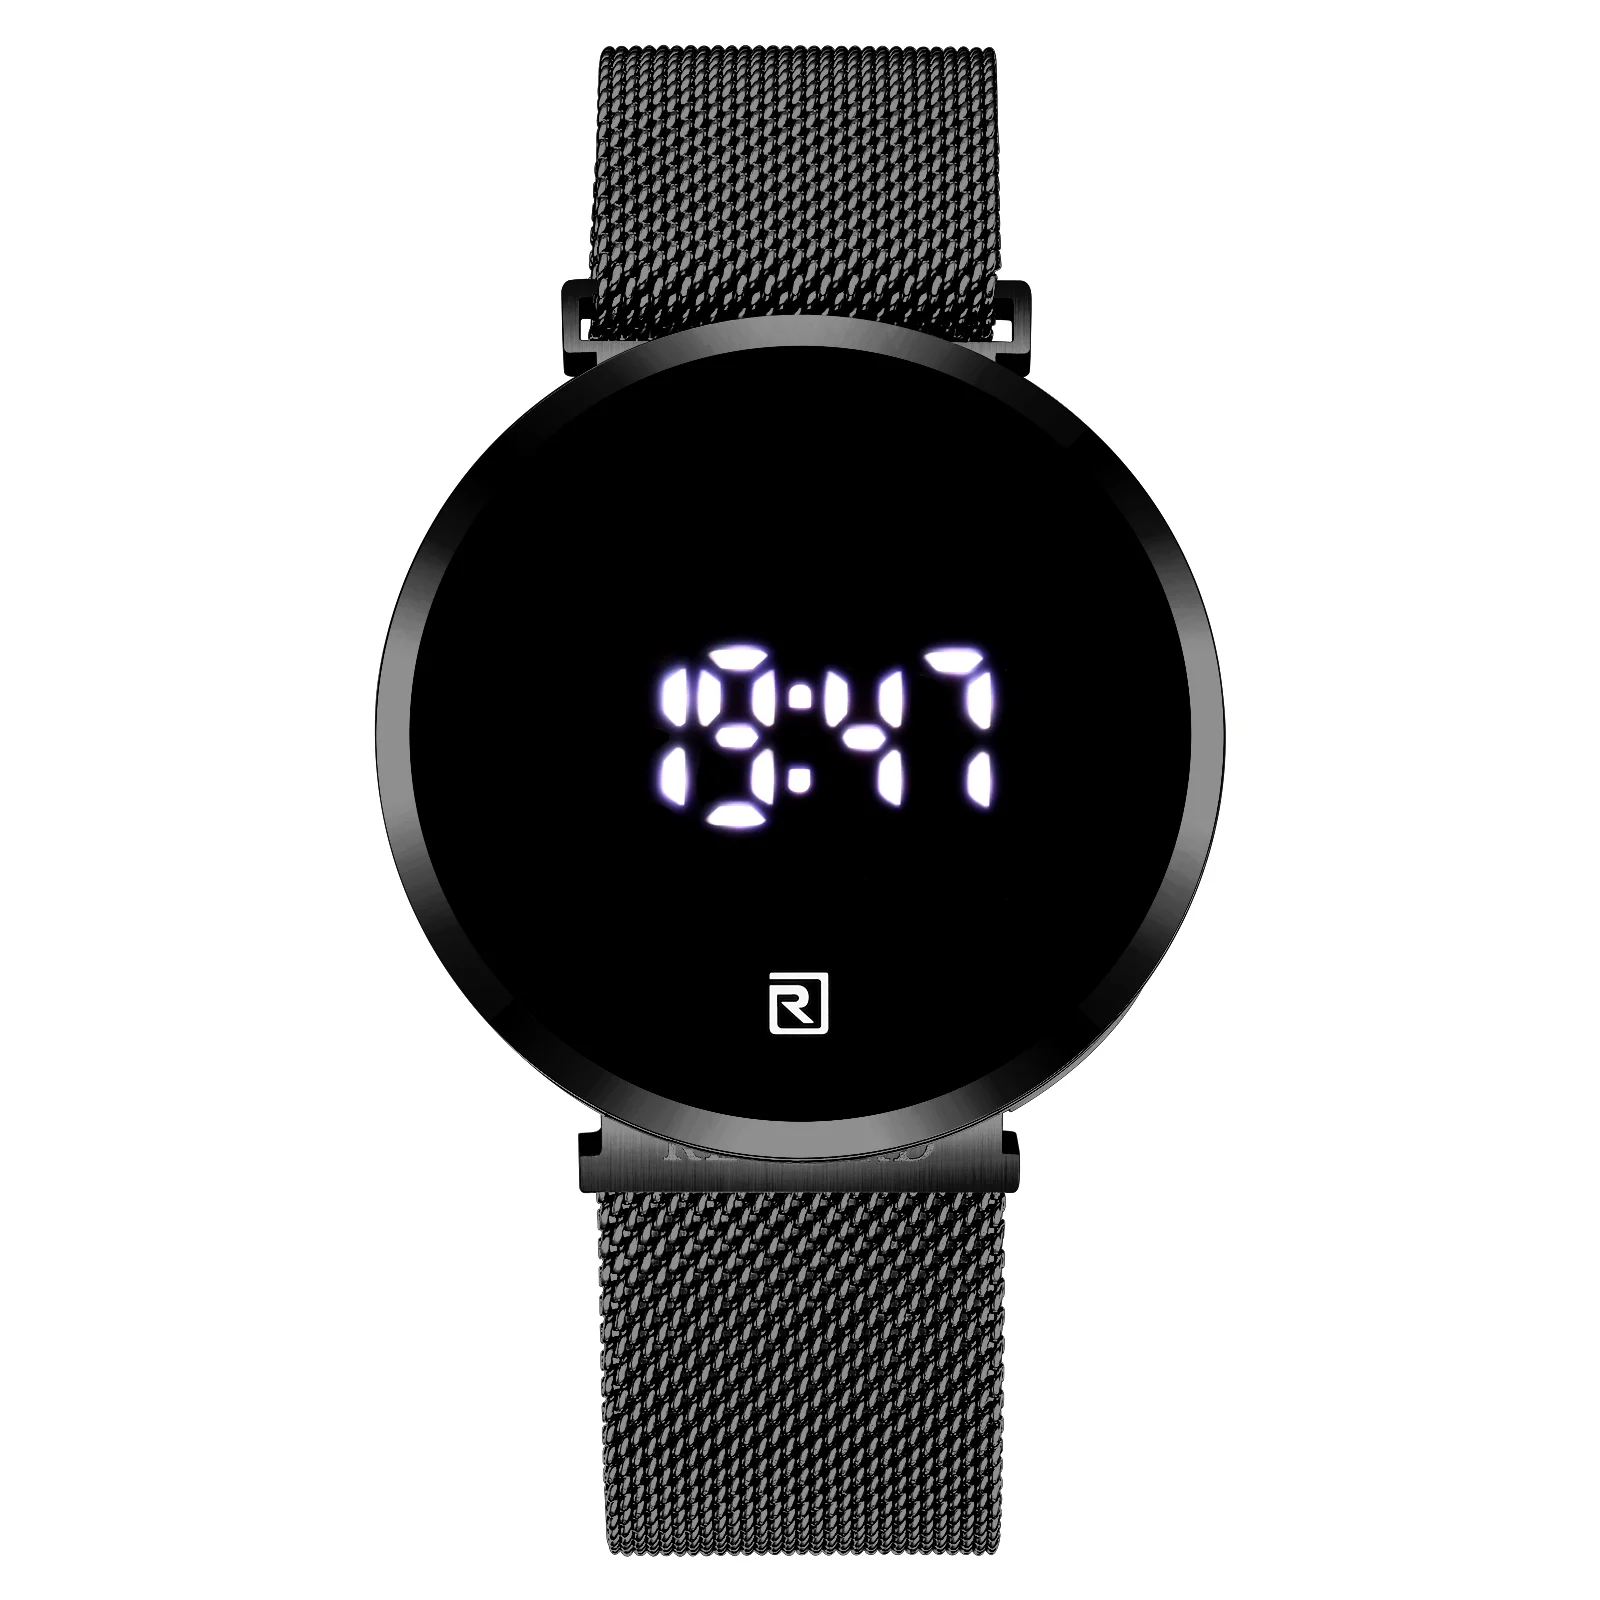 Reward Watch Men New Luxury Male Wristwatch Mens Fashion Touch Screen digital Men Watches  RD52002M